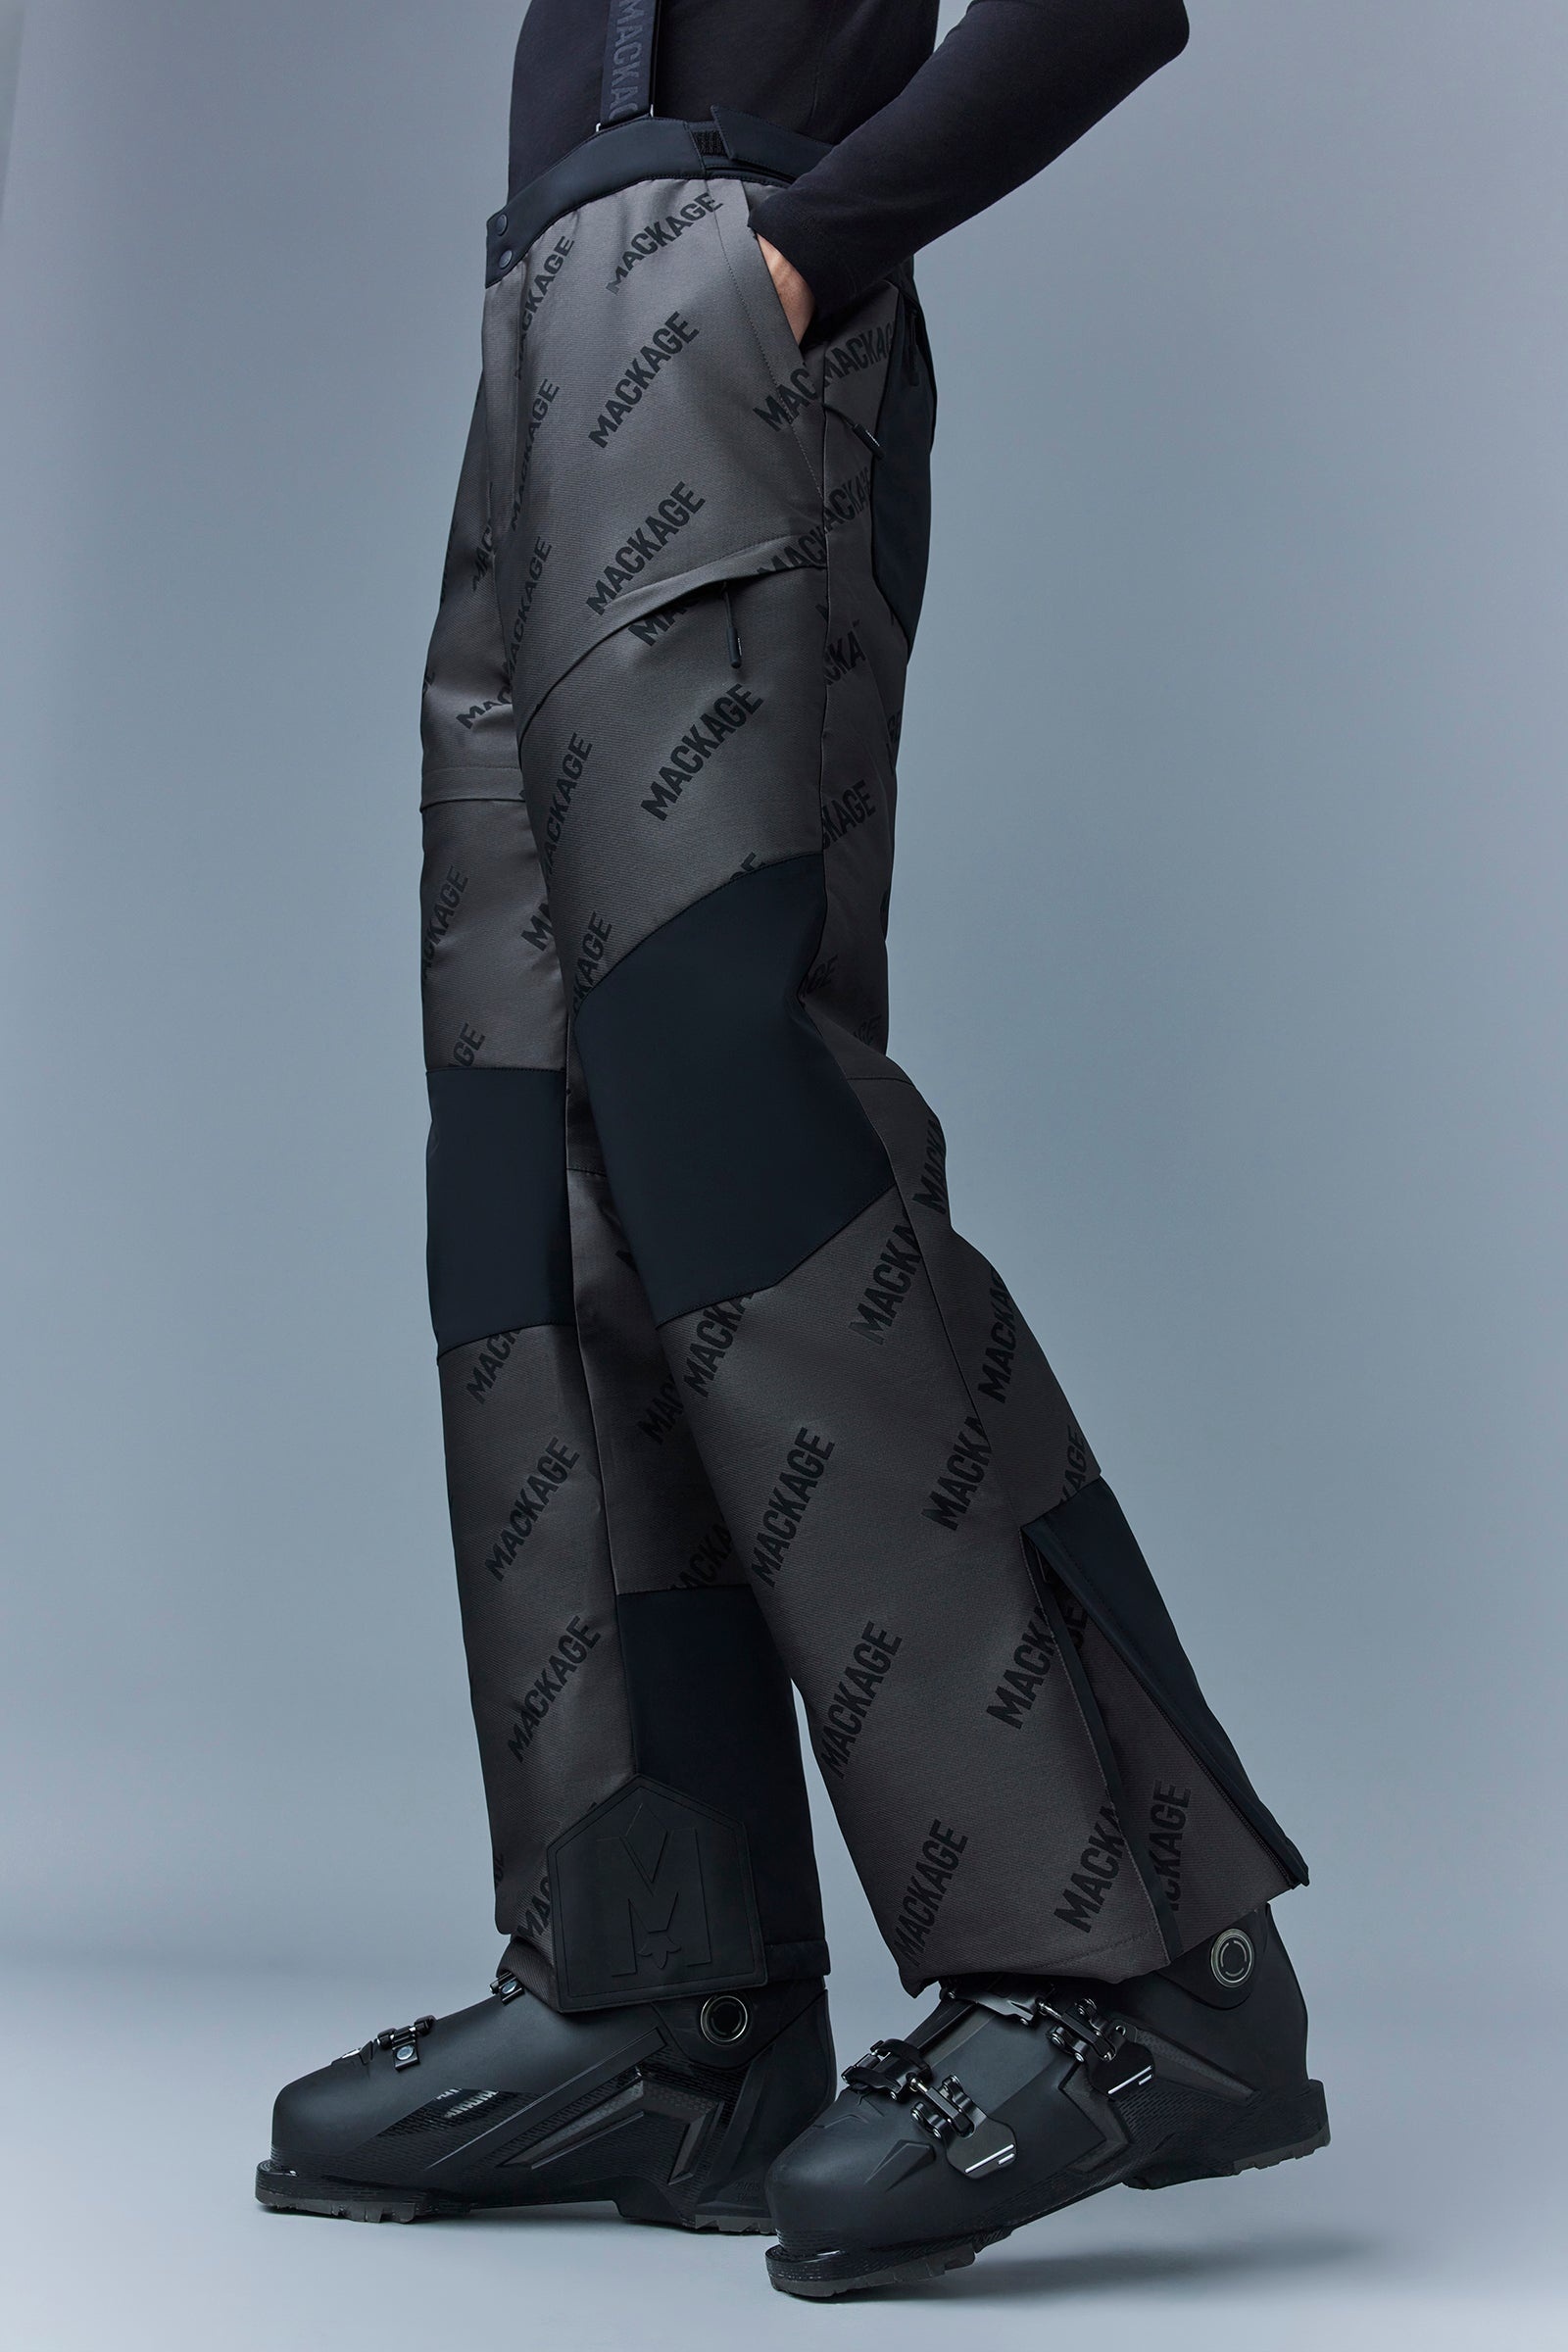 SHANE-JMG Technical ski pants with jacquard logo pattern and suspenders - 5